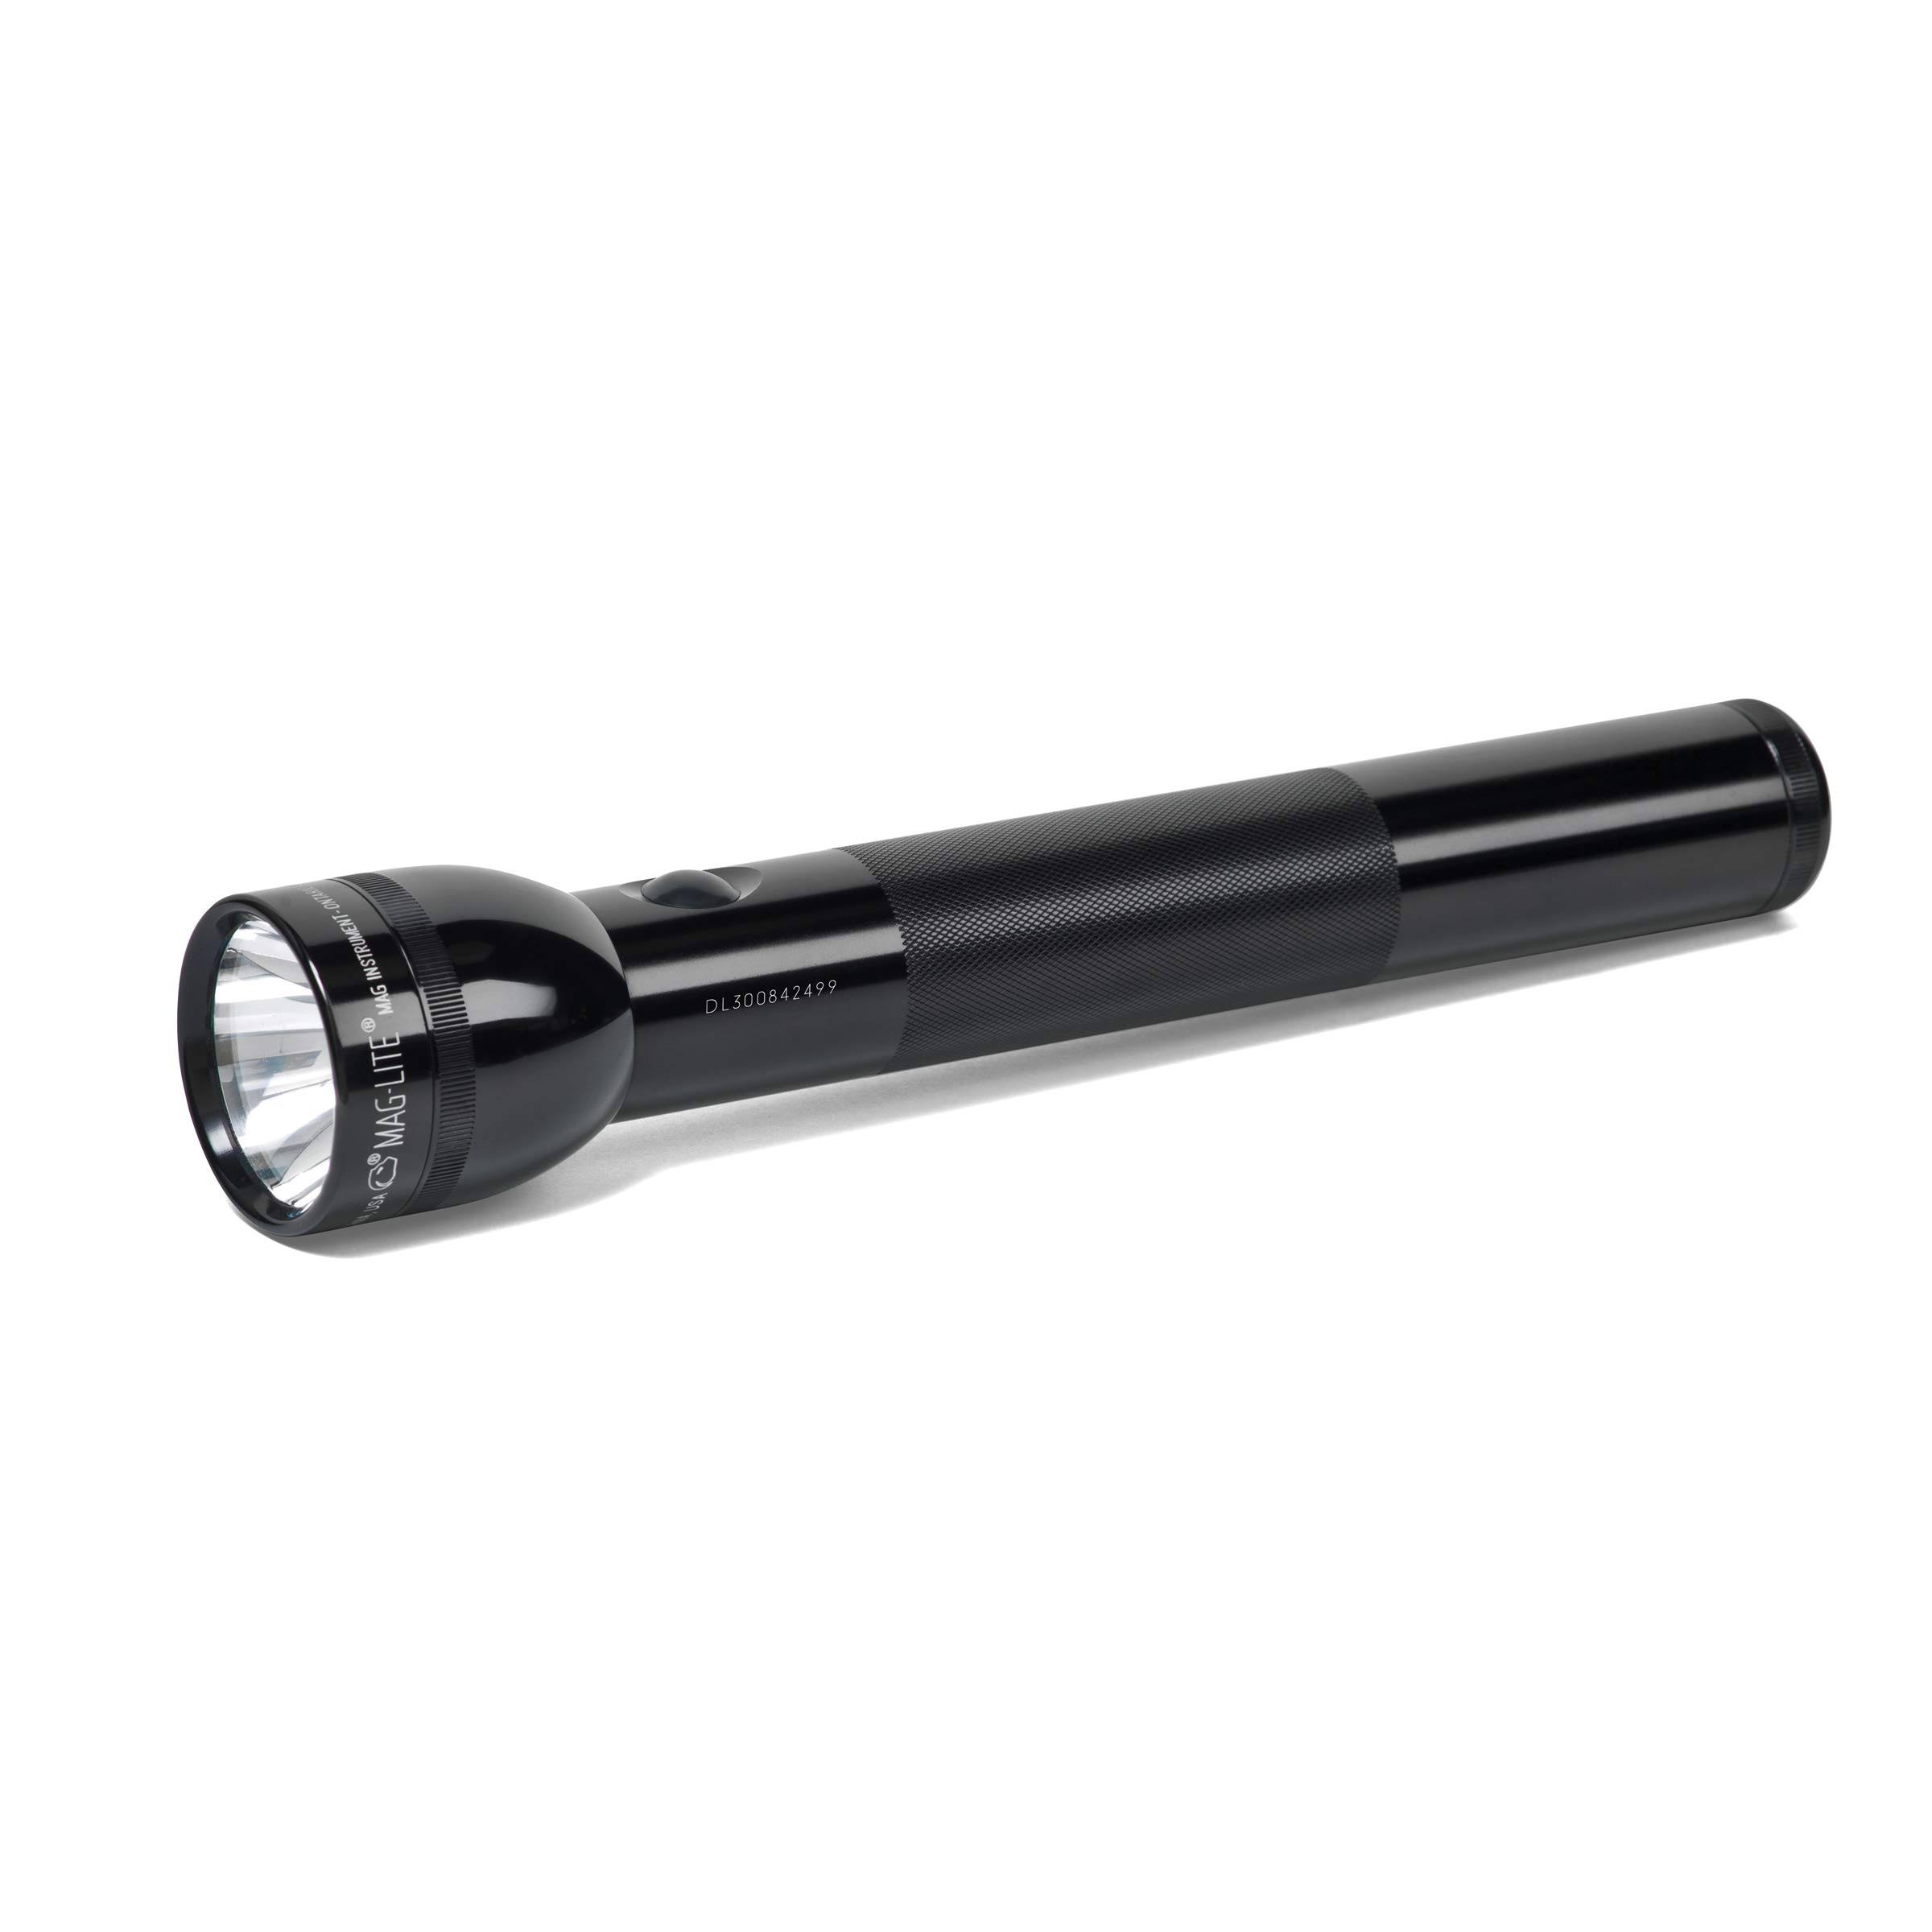 Maglite LED Torch - Black, 3W